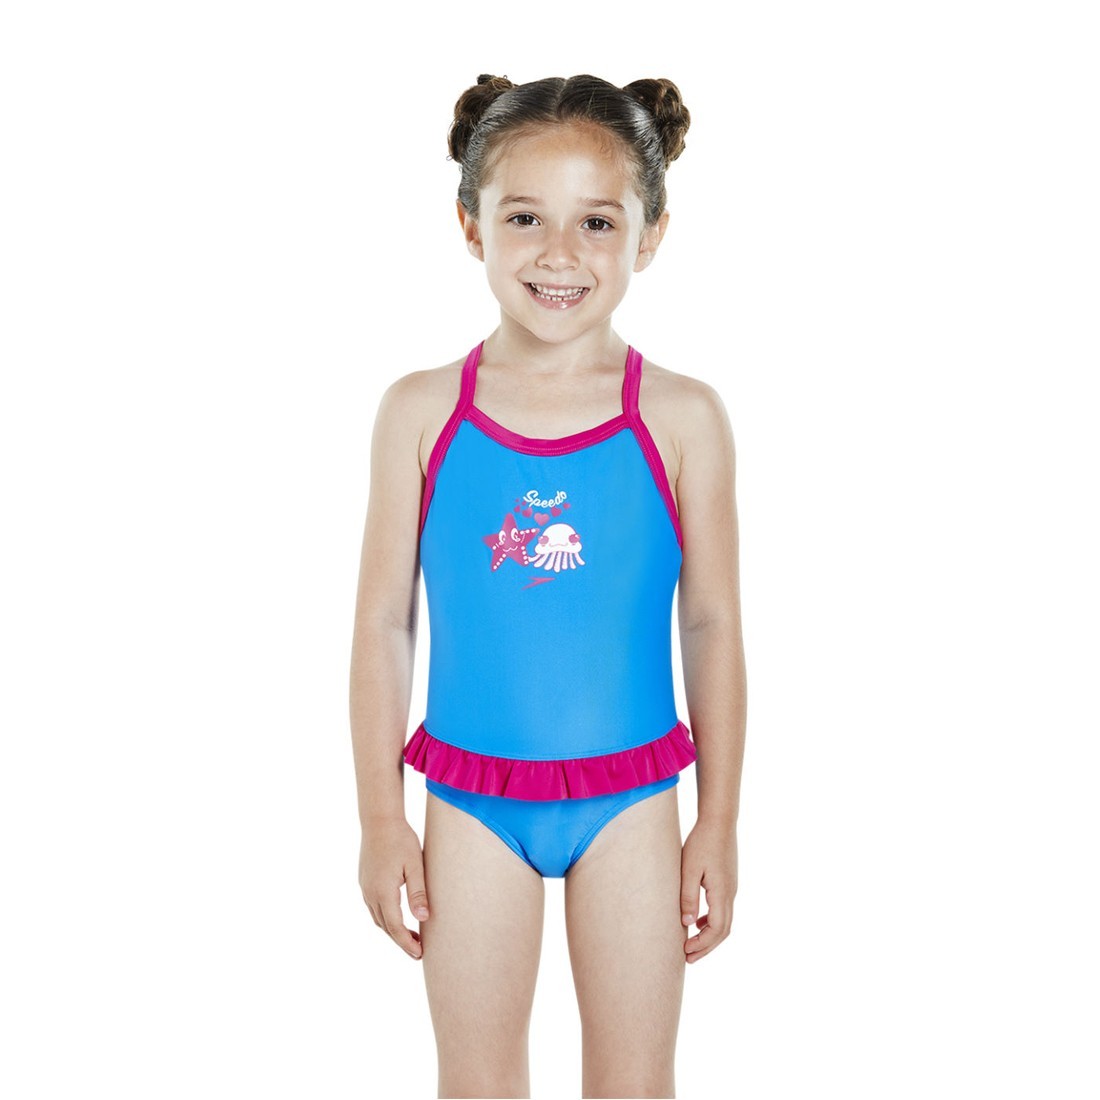 Speedo Infant Girls Digital Placement Training Swimsuit, 50% OFF